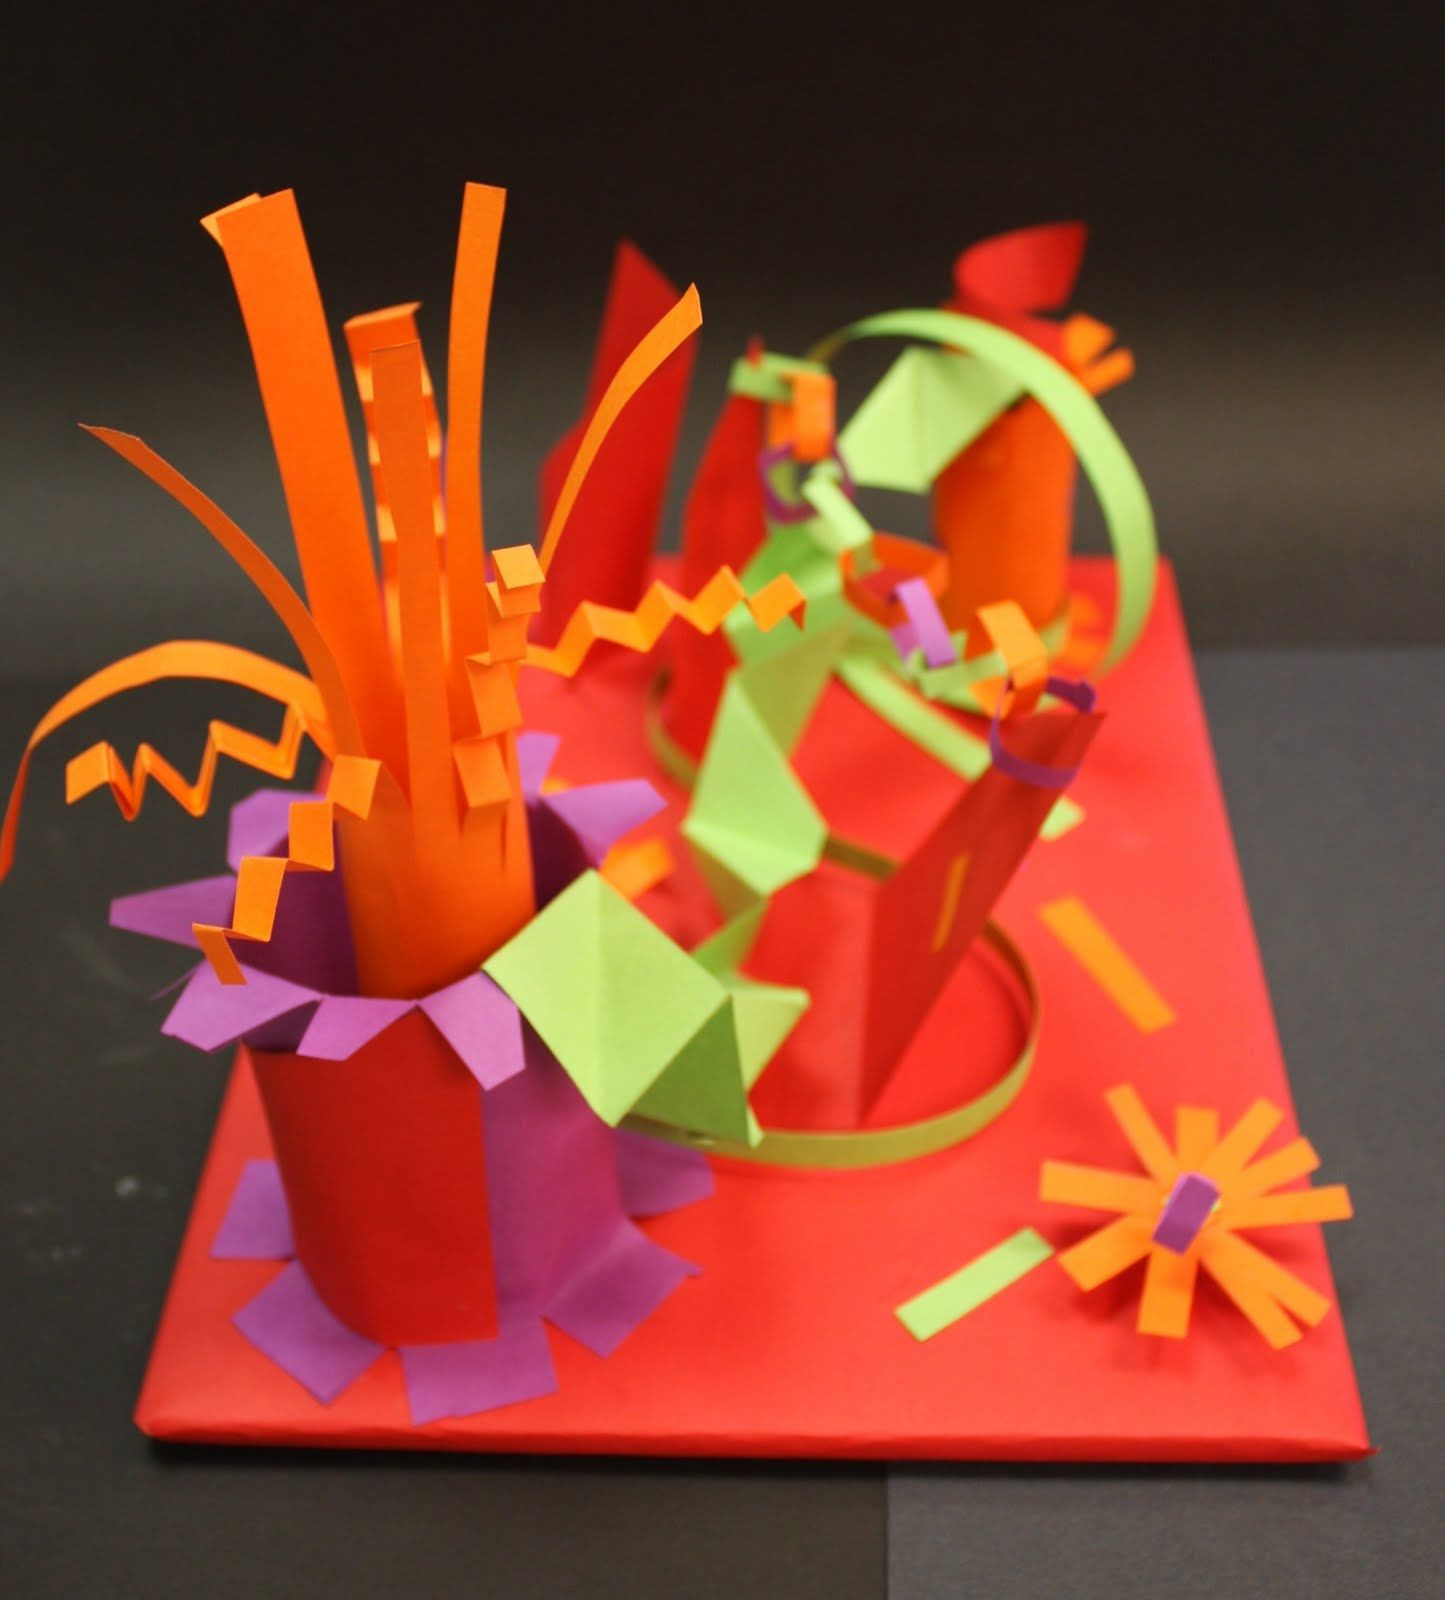 3D Art Projects For Kids
 Wow fun paper sculpture Teaches great fine motor